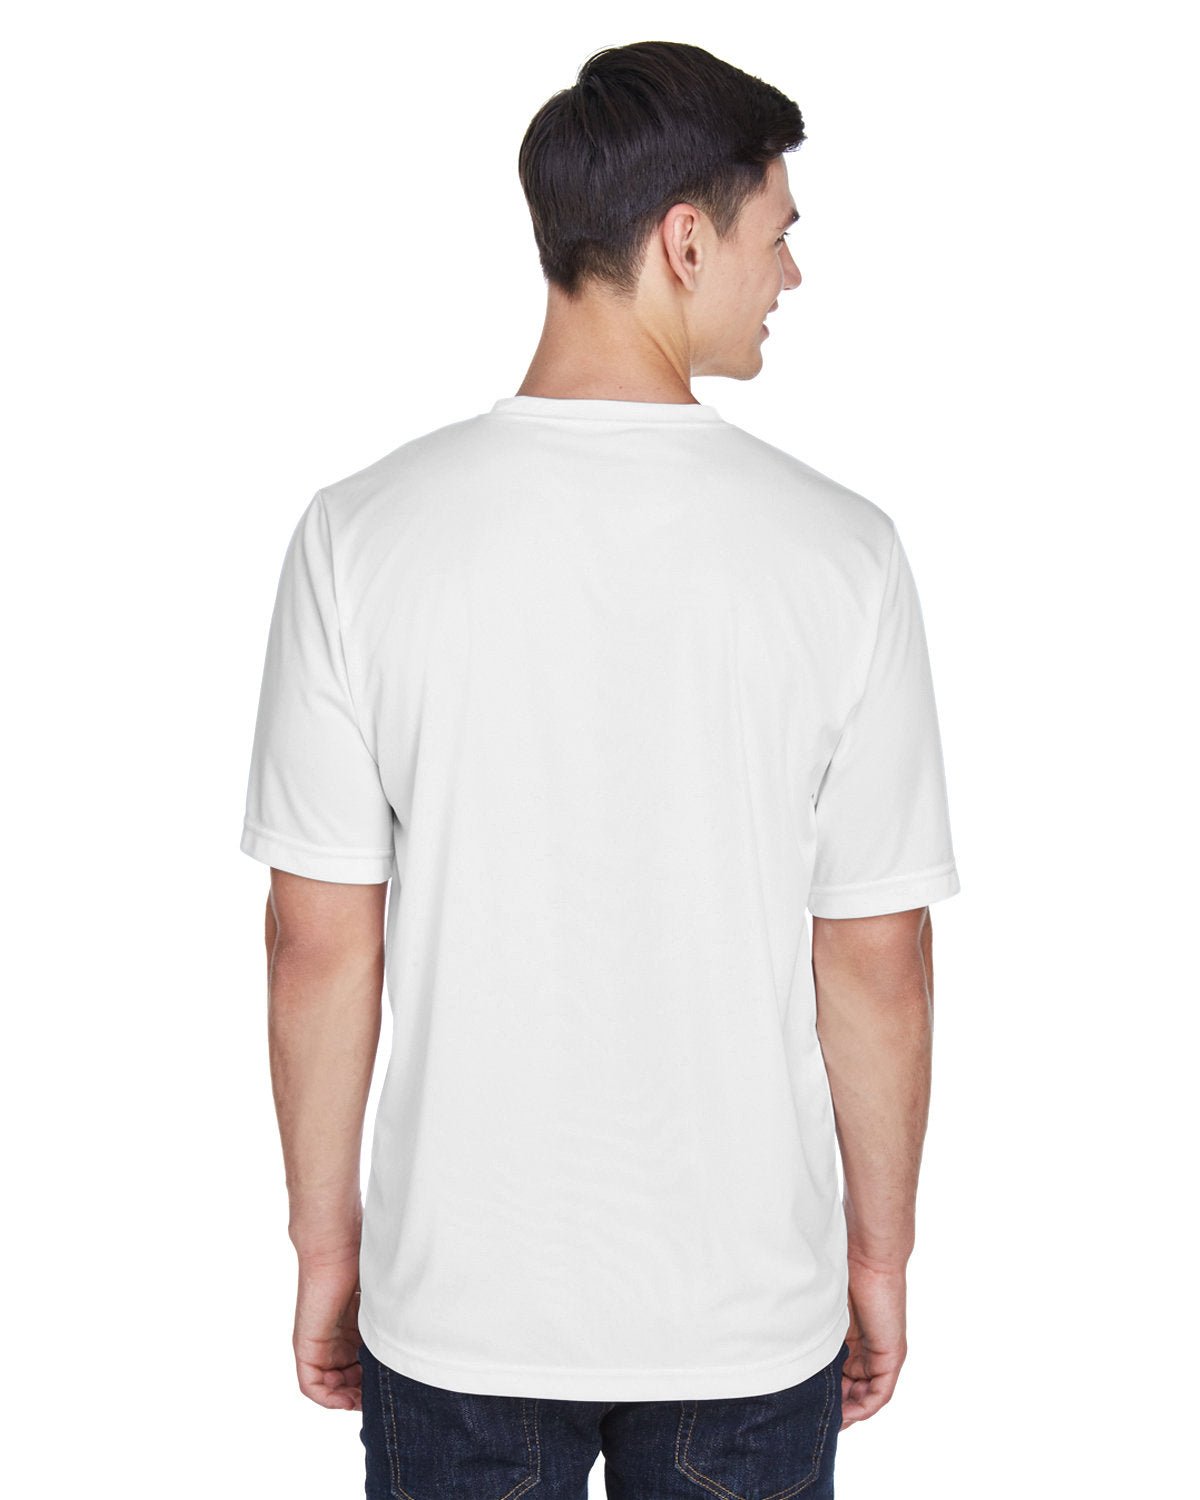 TT11-Team 365-WHITE-Team 365-T-Shirts-2